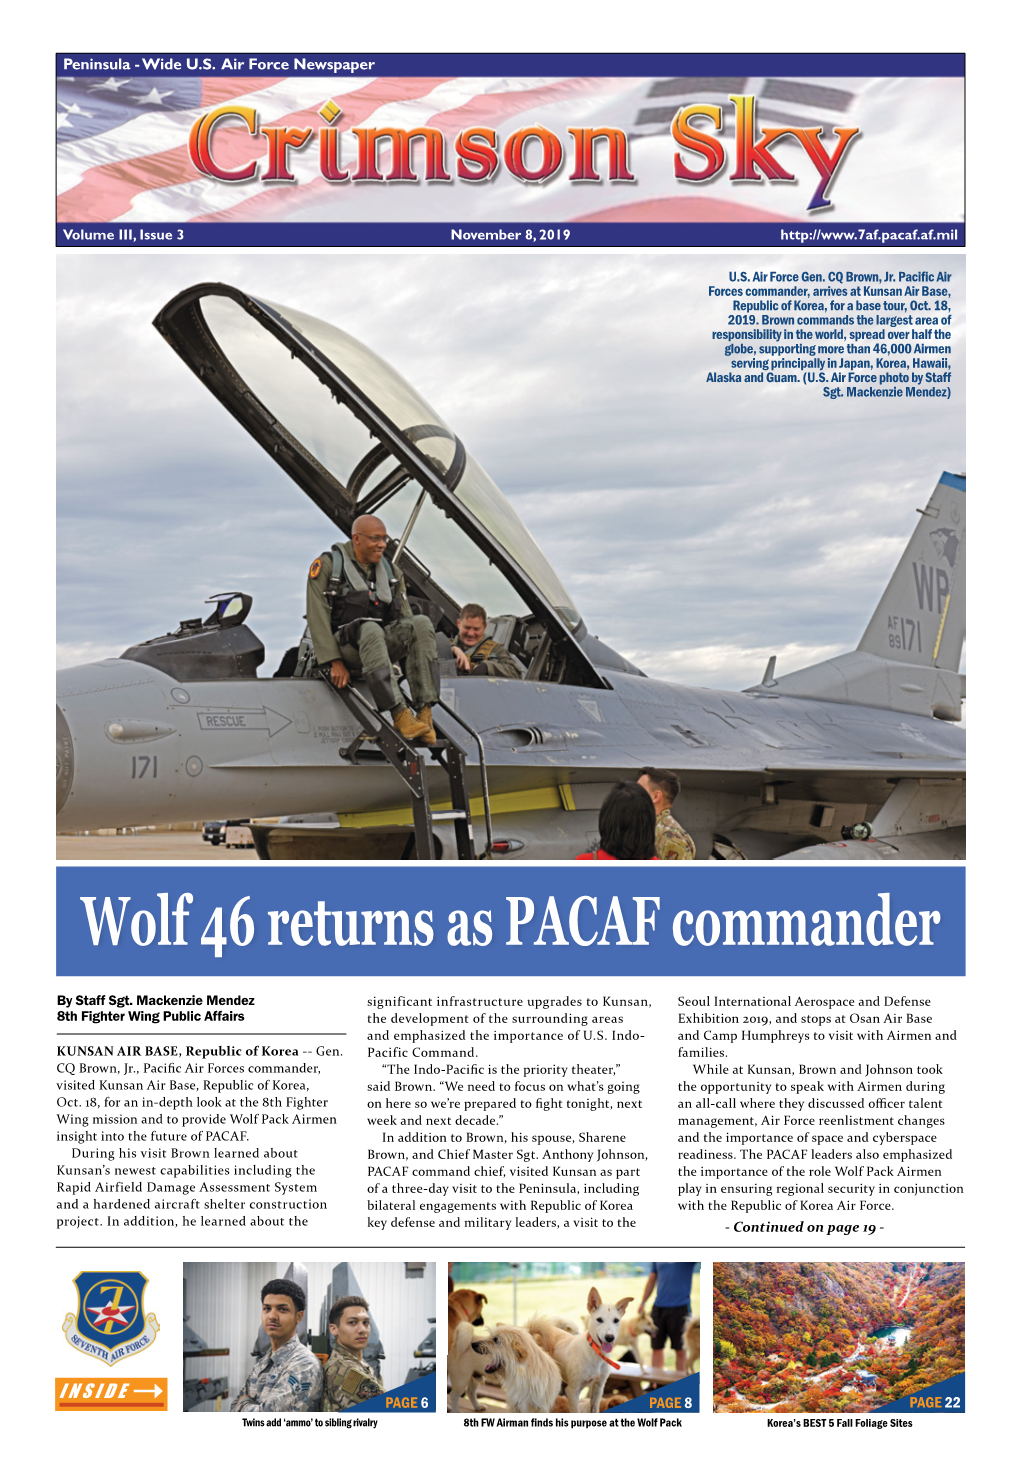 Wolf 46 Returns As PACAF Commander